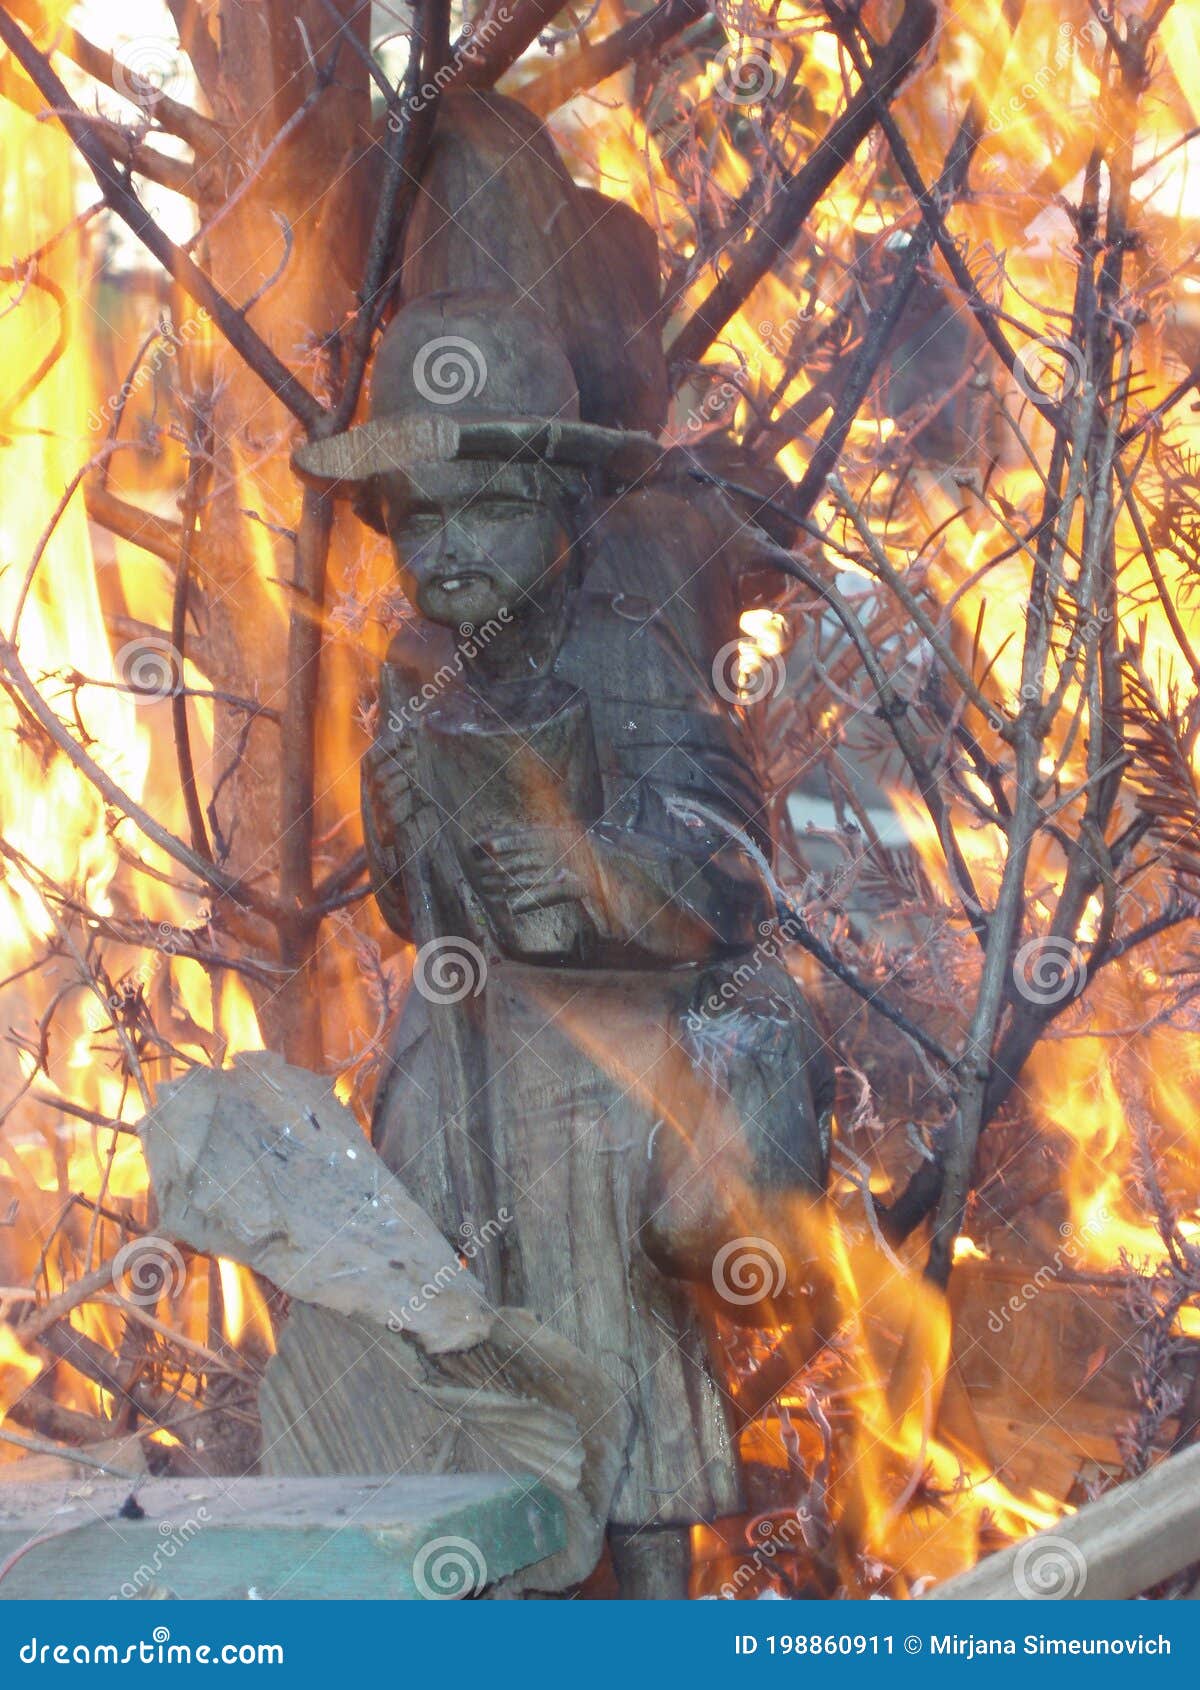 wood sculpture in fire